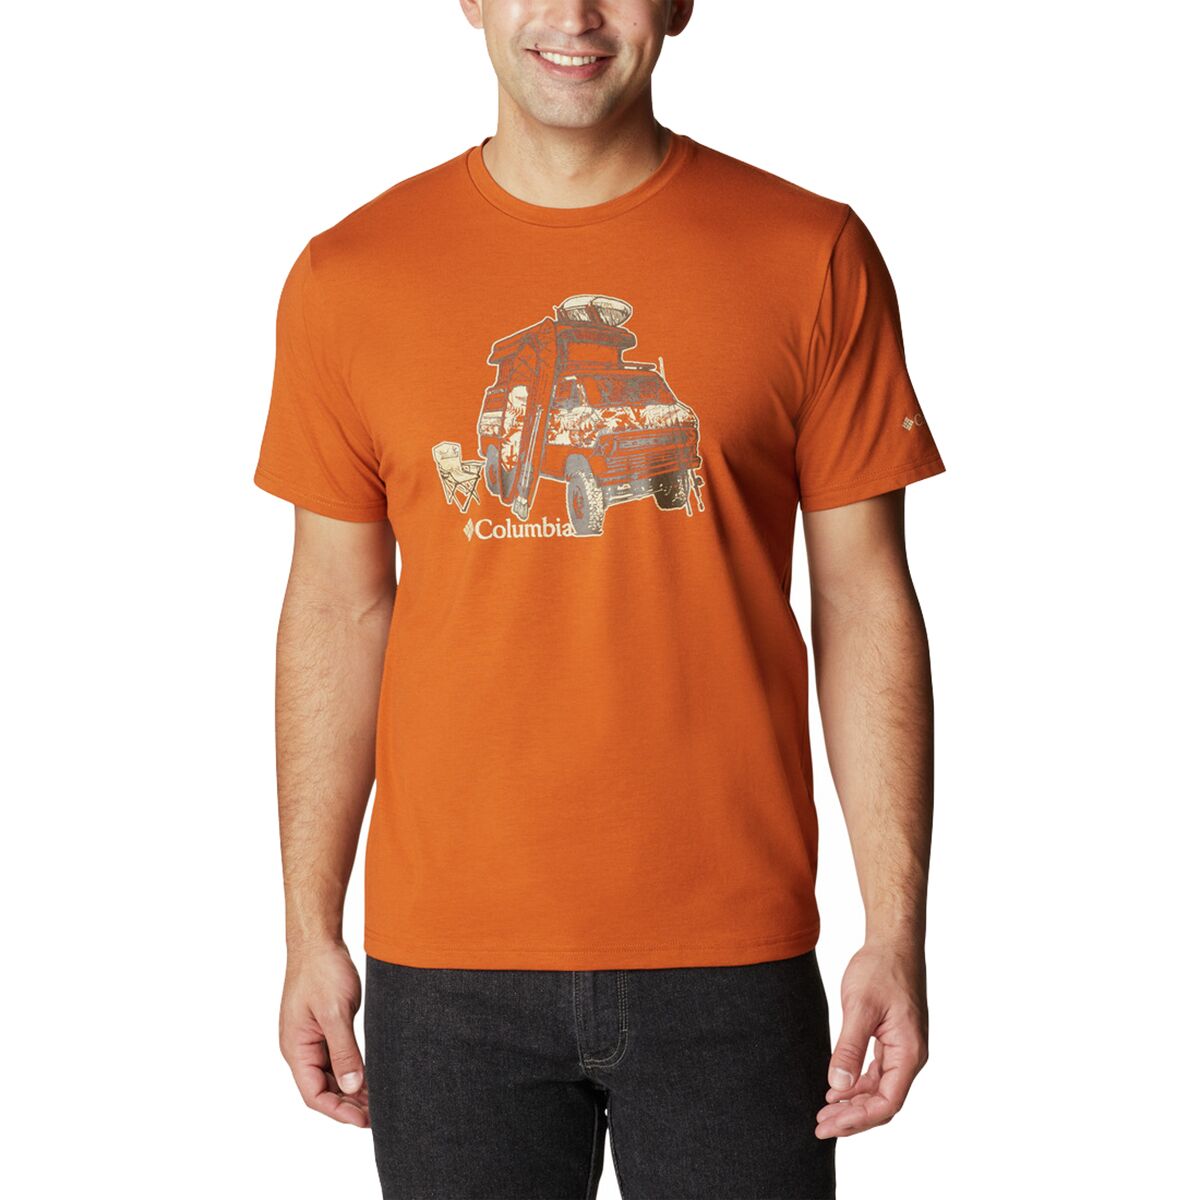 Sun Trek Short-Sleeve Graphic T-Shirt - Men